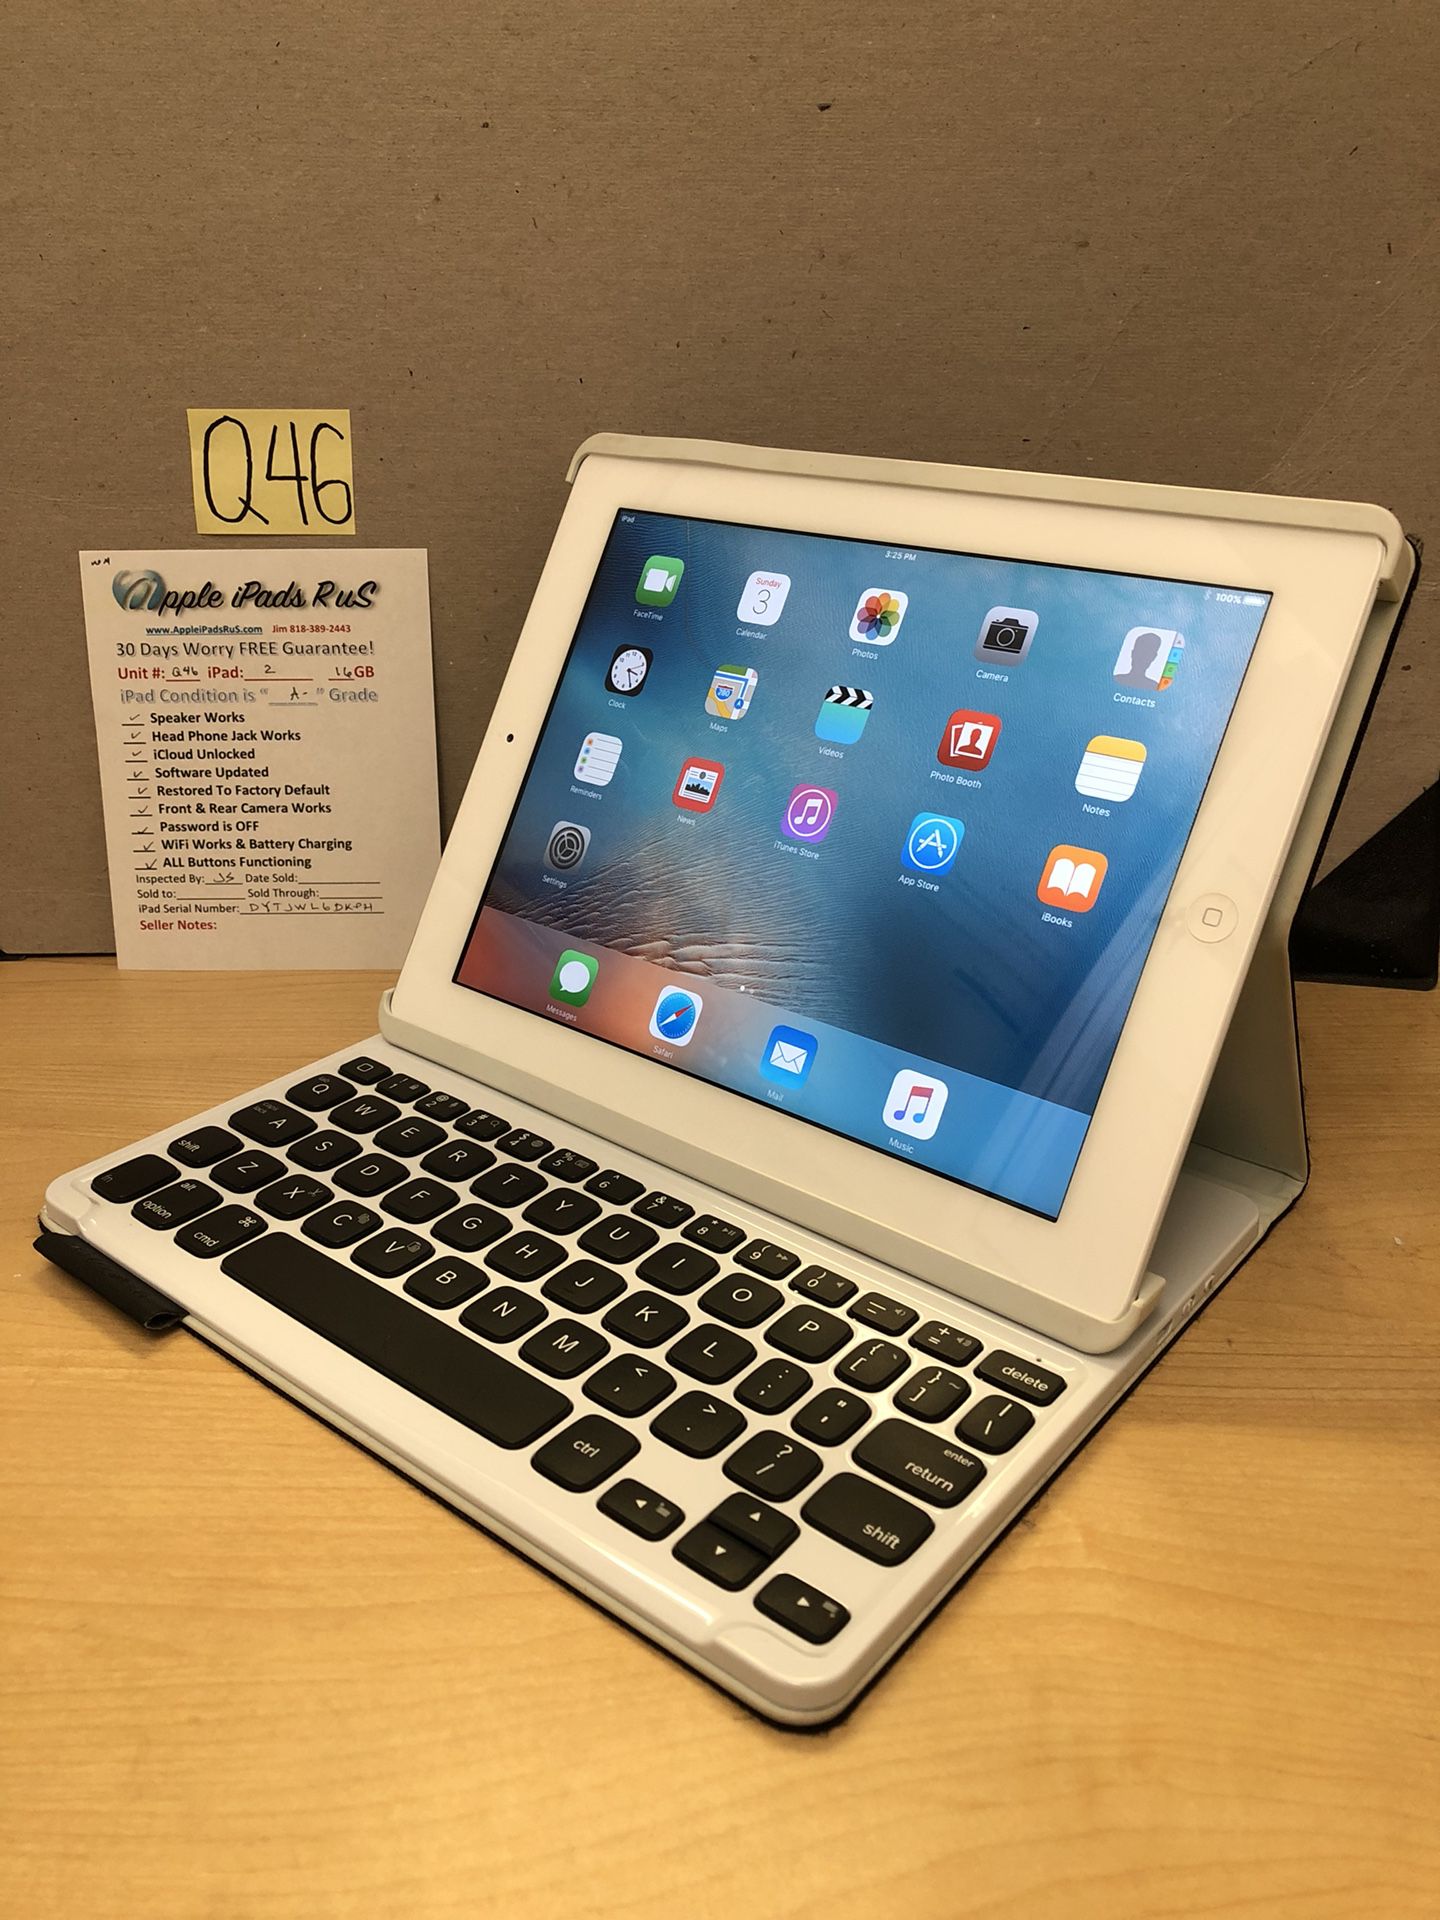 Q46 - iPad 2 16GB with Keyboard